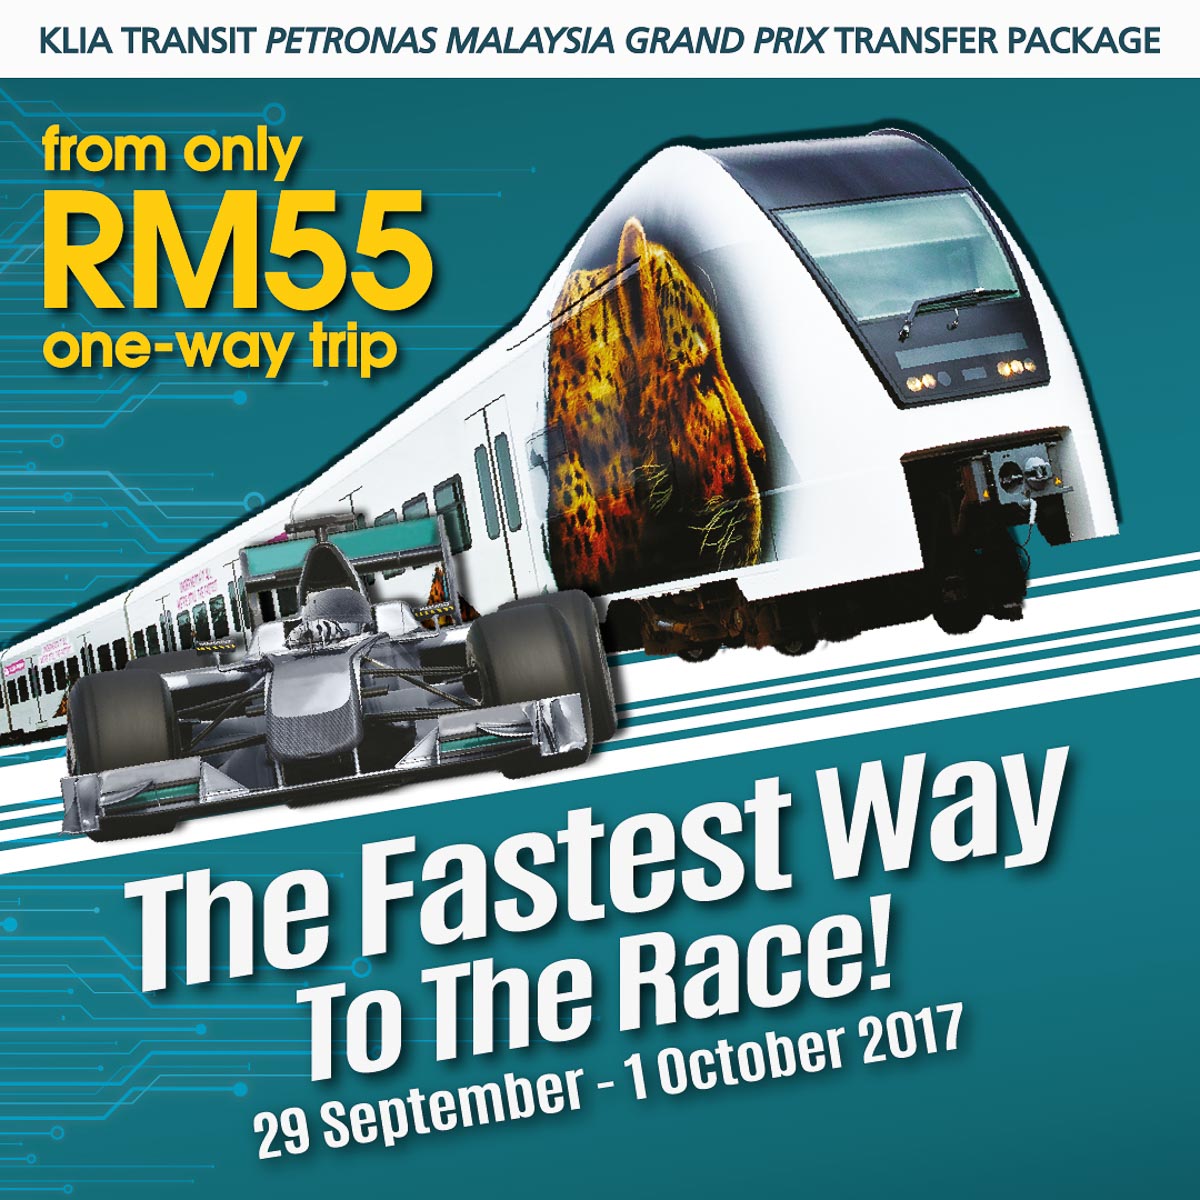 Malaysia Grand Prix Transfer Package